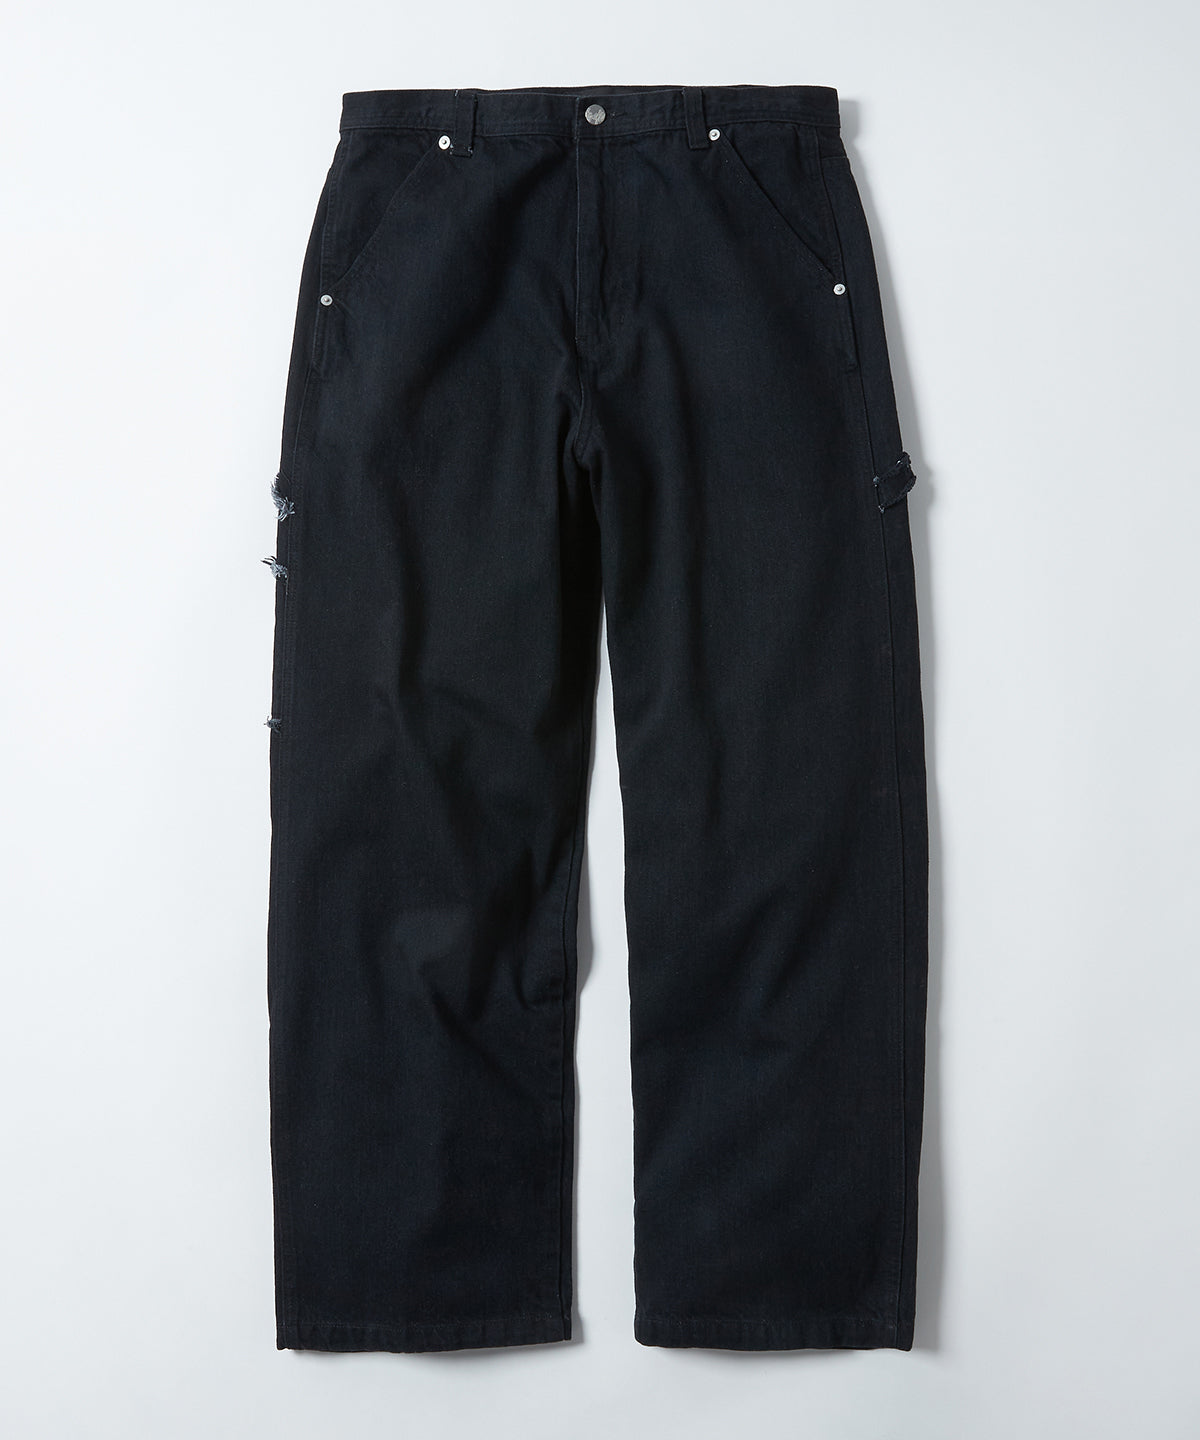 Unisex Street Brand Monochrome Black Hakama Denim Trousers at Erebus